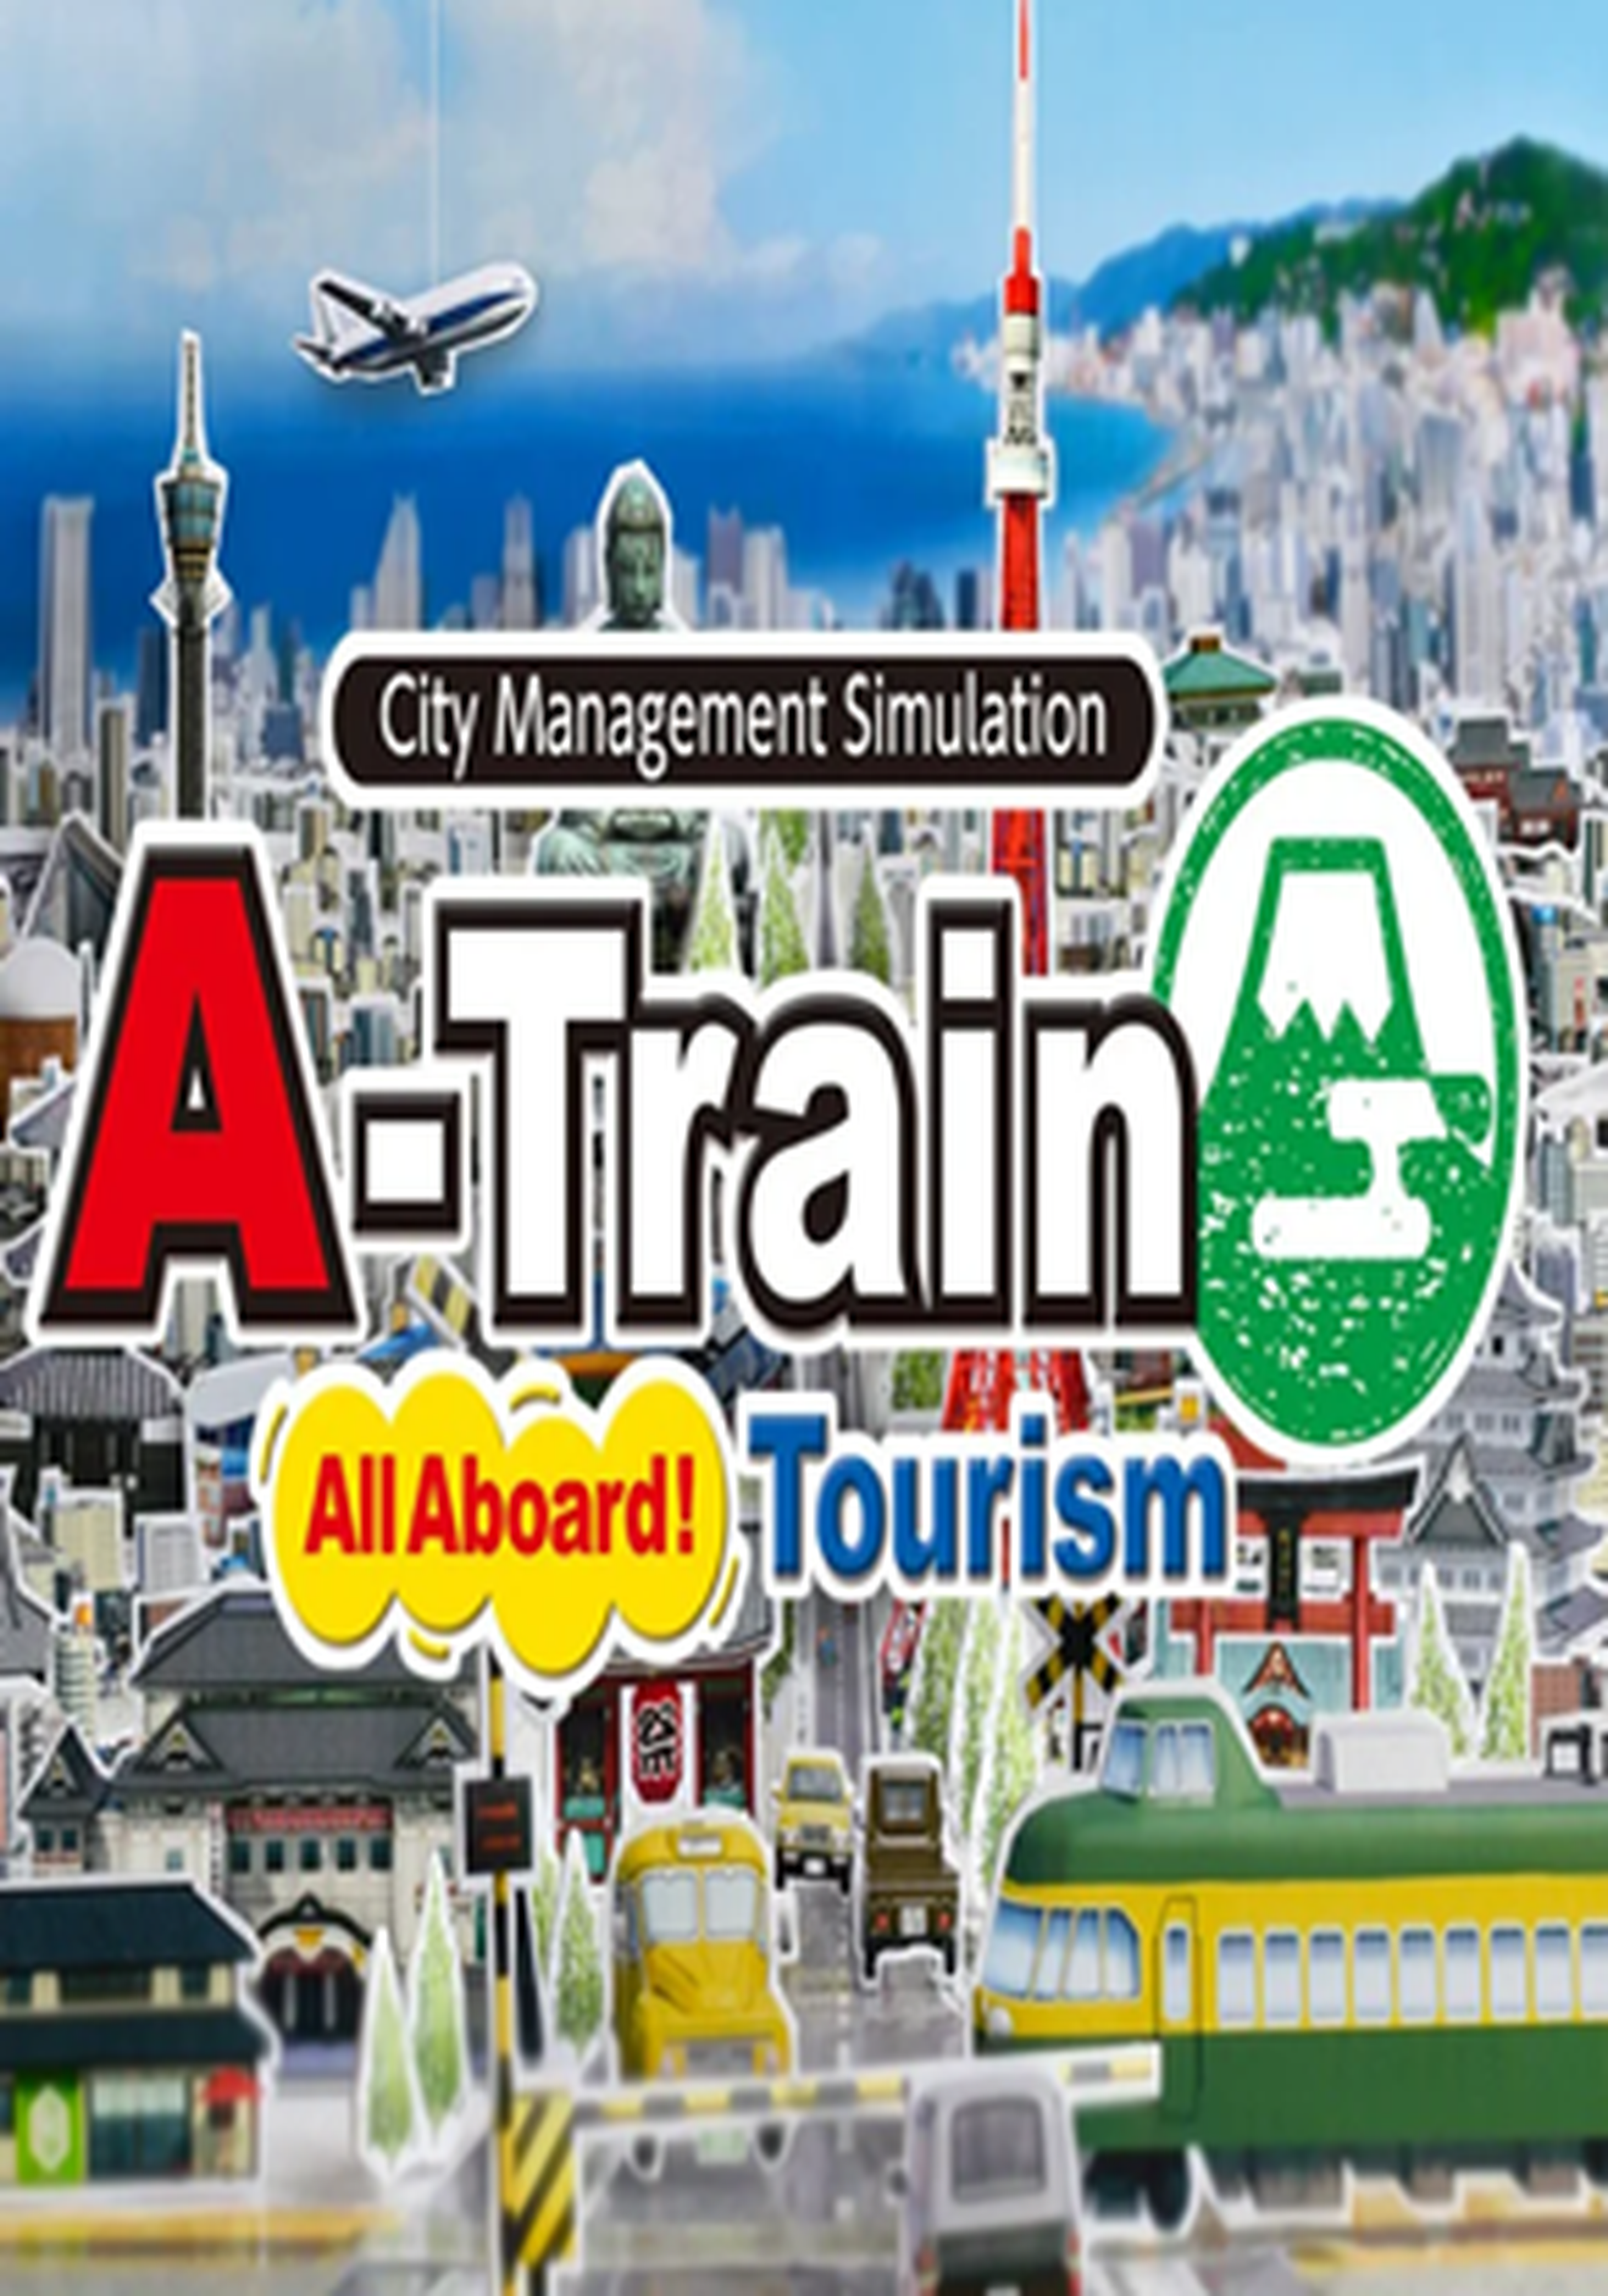 A-Train All Aboard Tourism cartel